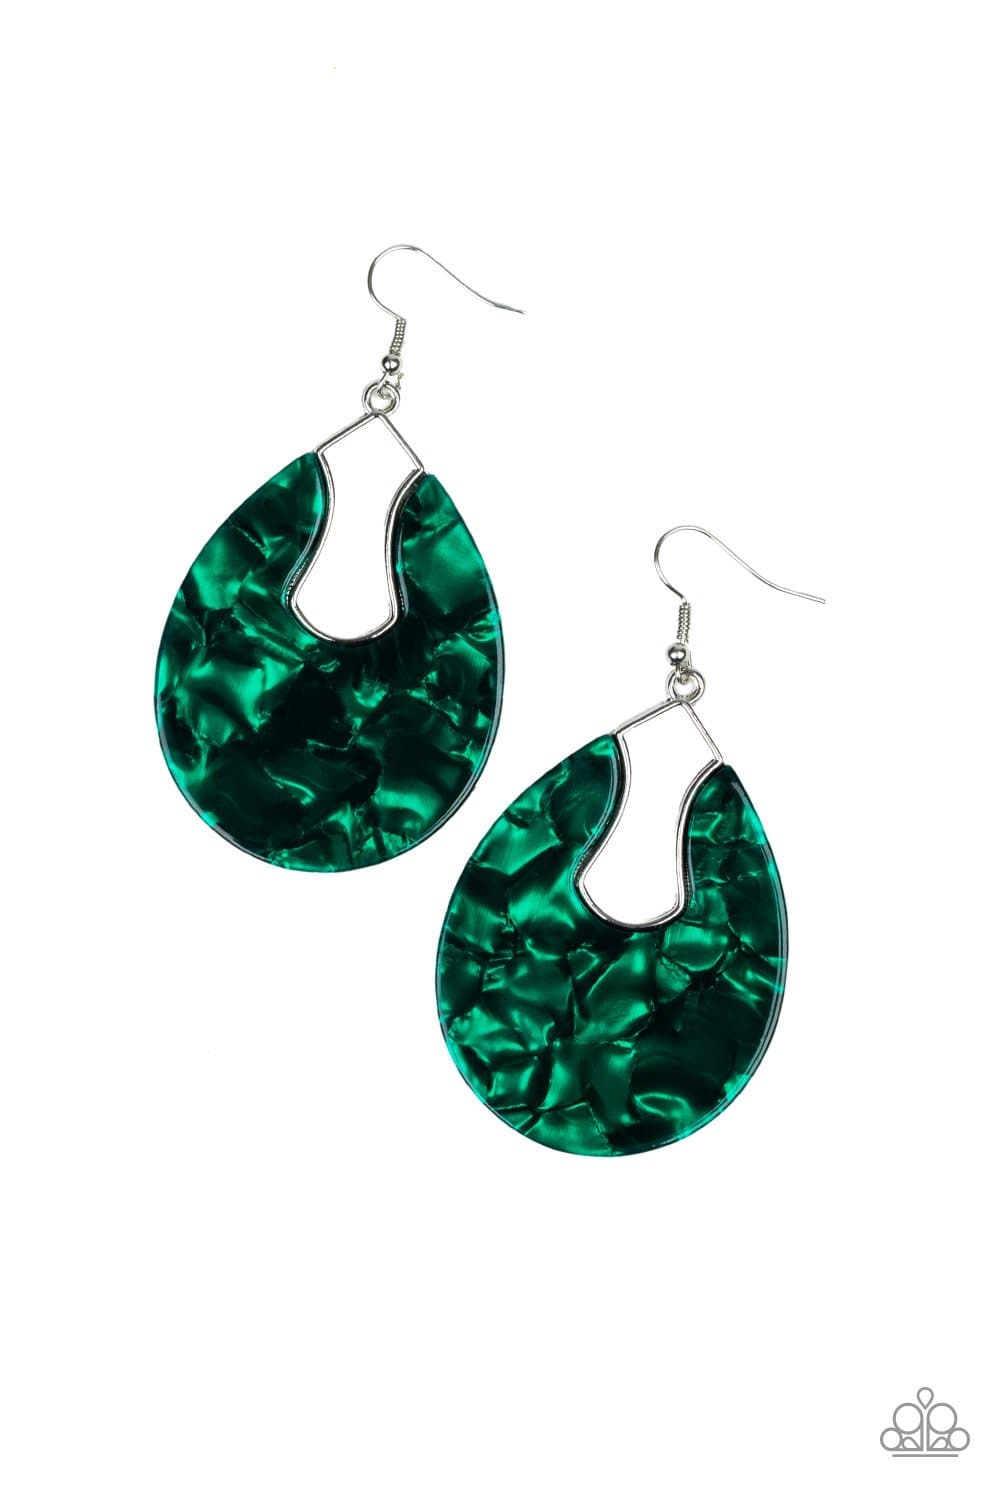 Pool Hopper - Green Acrylic Earrings - Paparazzi Accessories - GlaMarous Titi Jewels